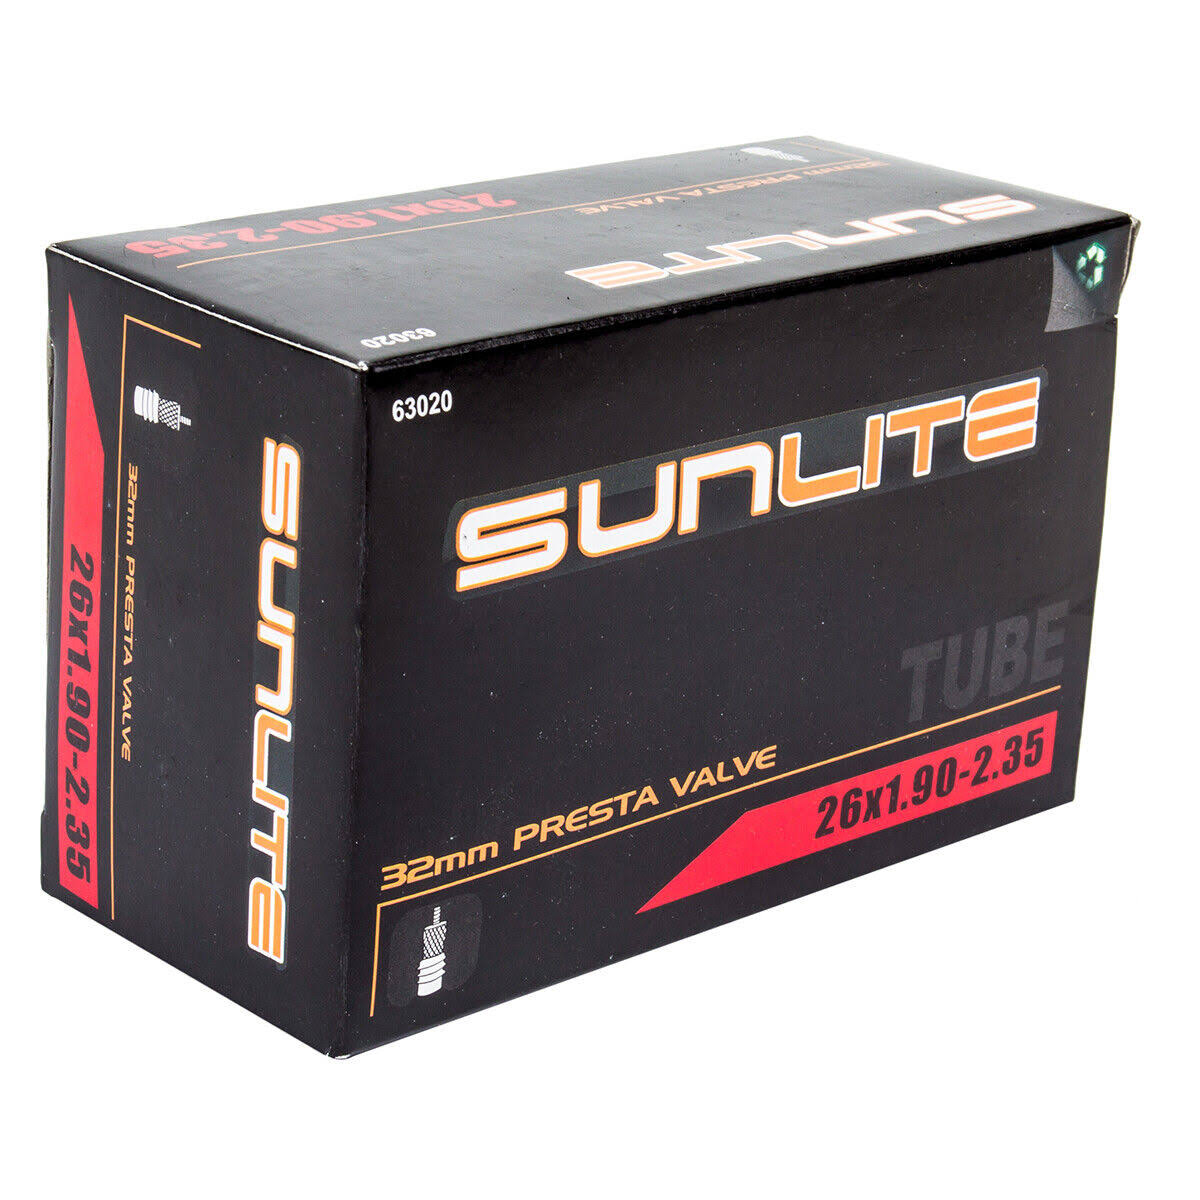 Sunlite Standard Presta Valve Tubes - Black, 26x1.90-2.35"